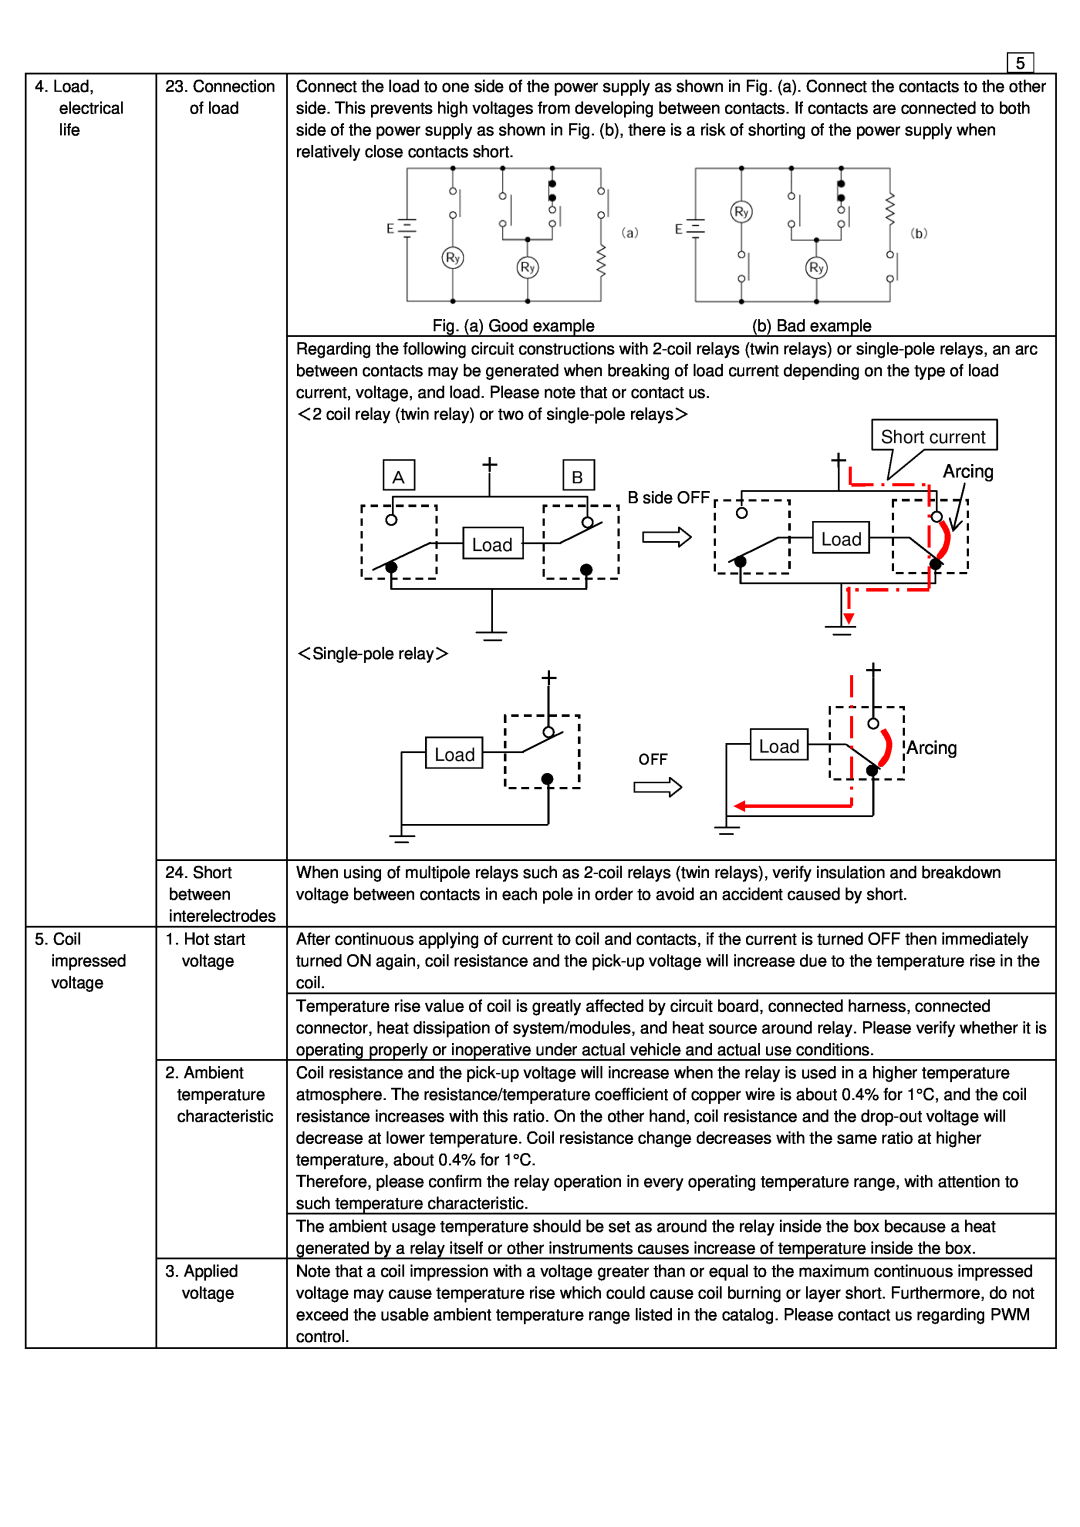 Panasonic ASCT1F46E manual Short current, Arcing, Load 